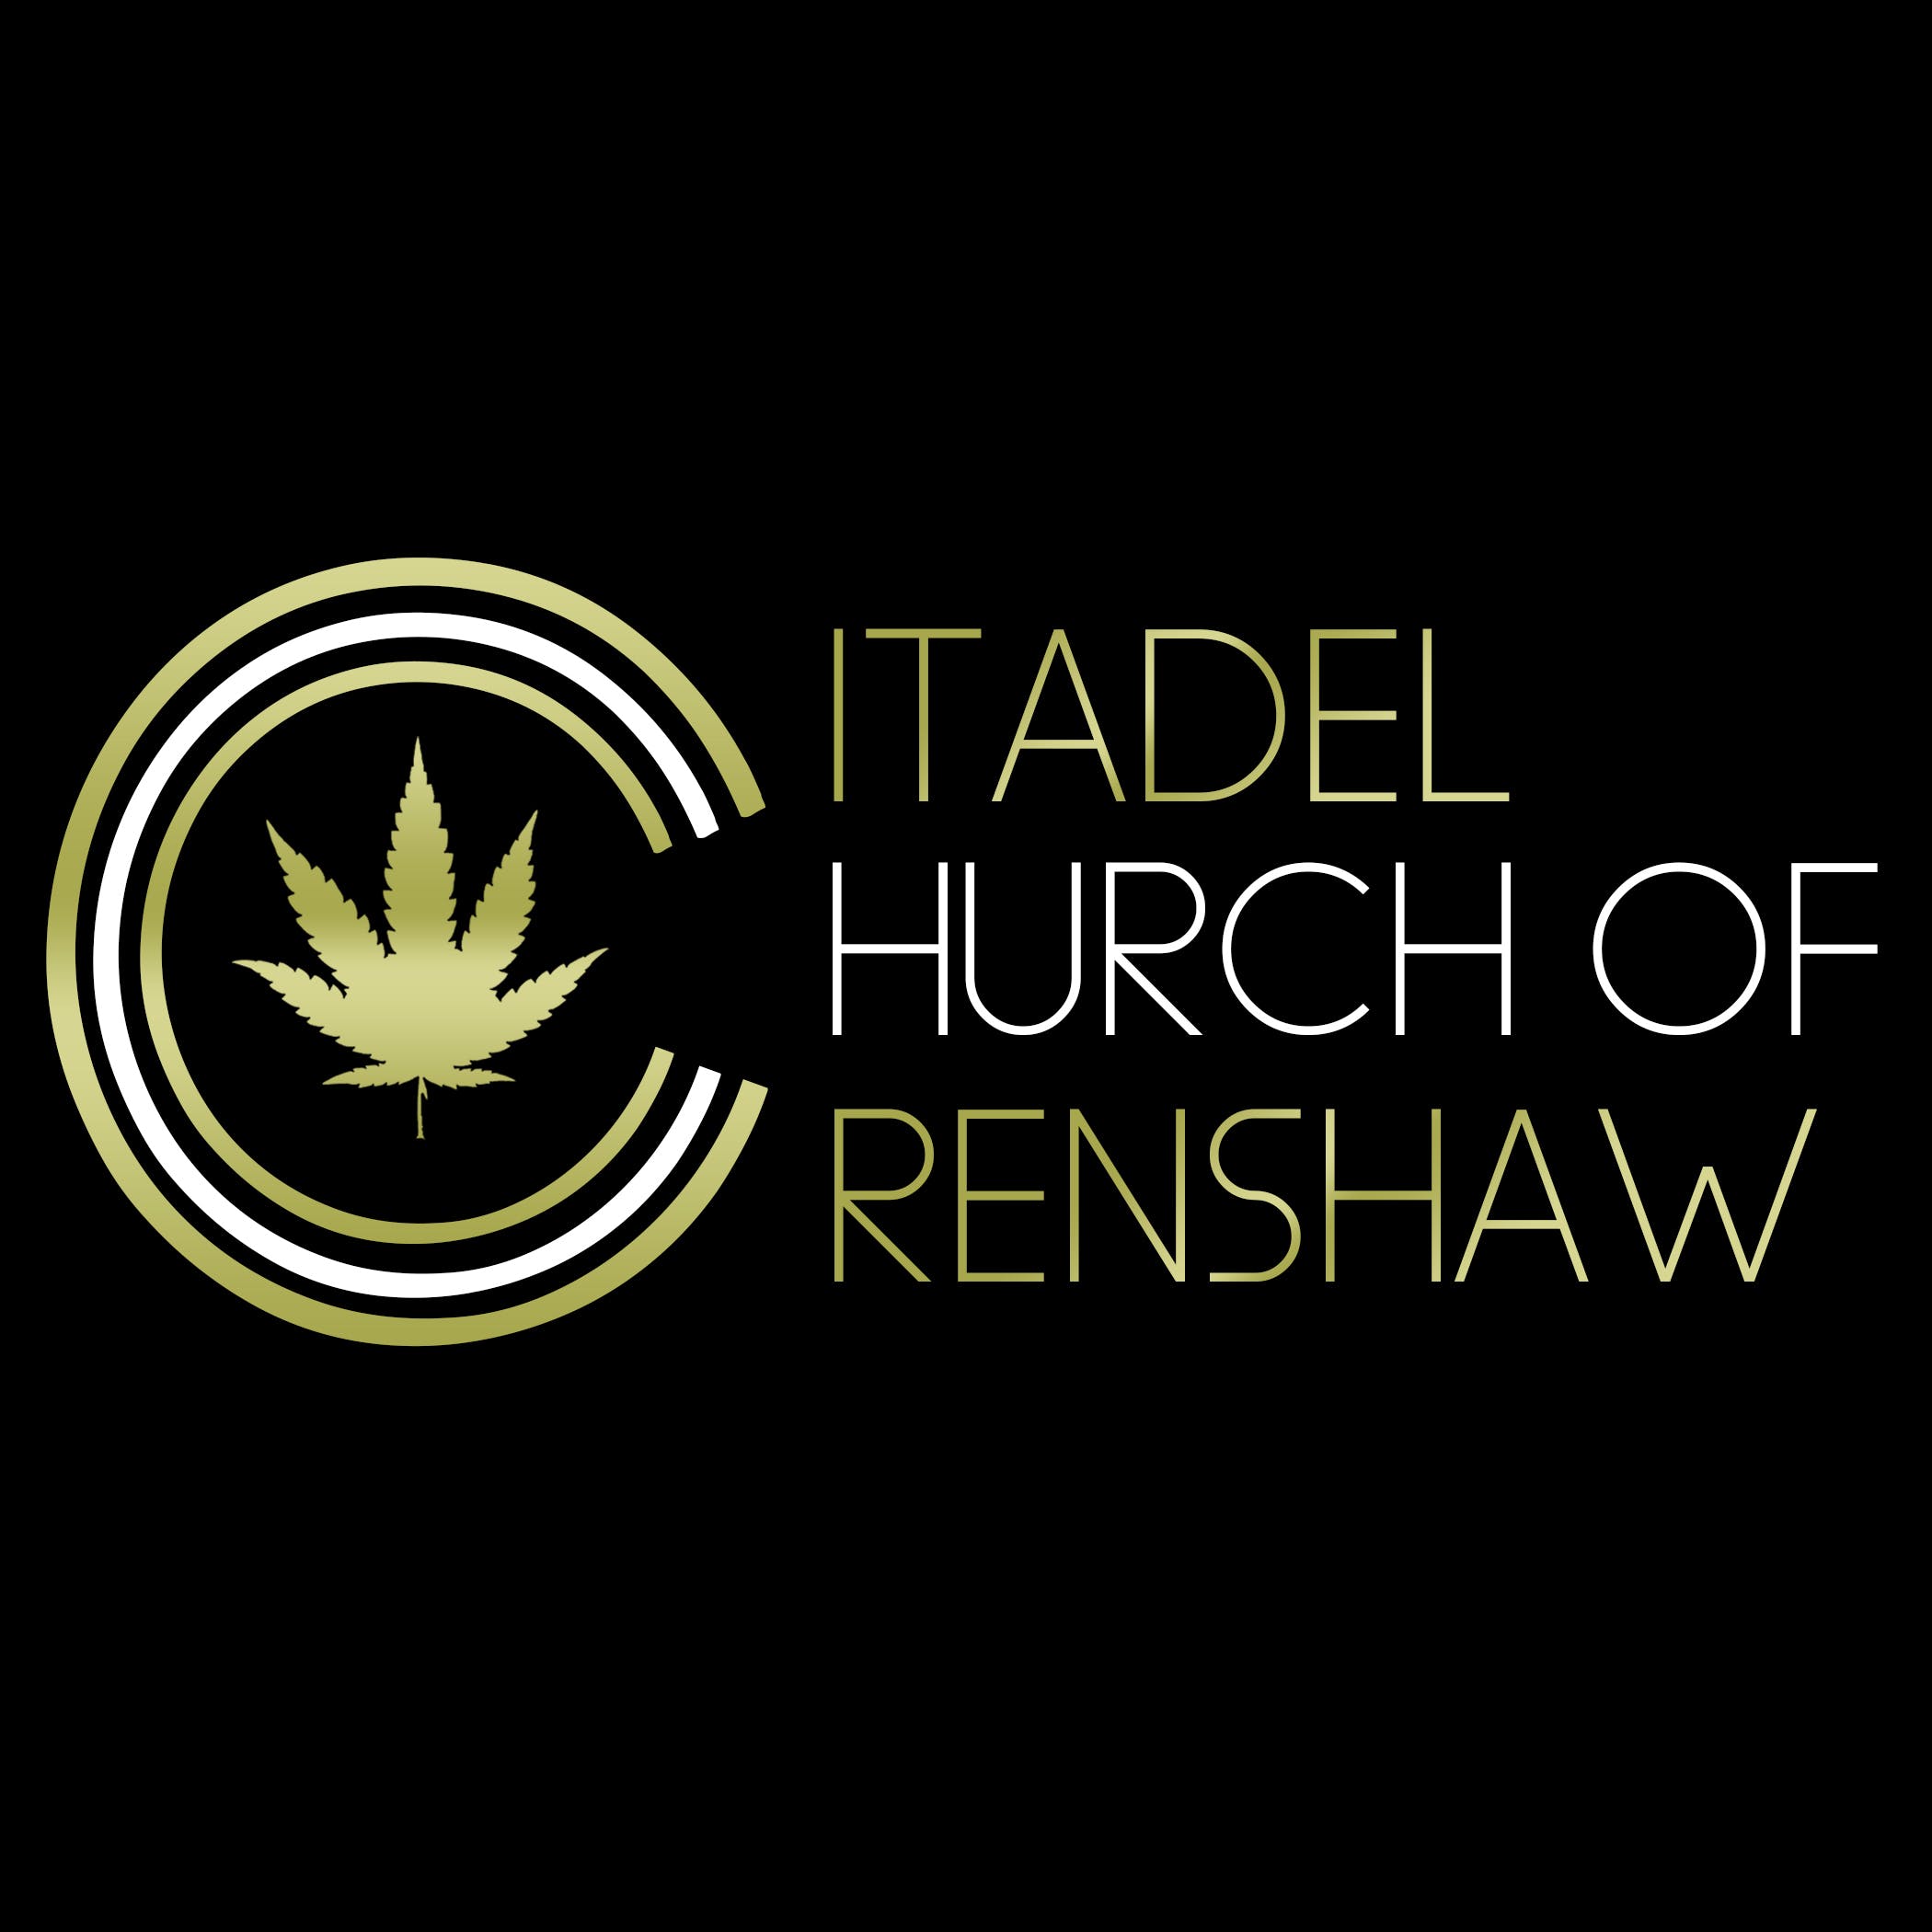 Citadel Church of Crenshaw - Medical Marijuana Doctors - Cannabizme.com